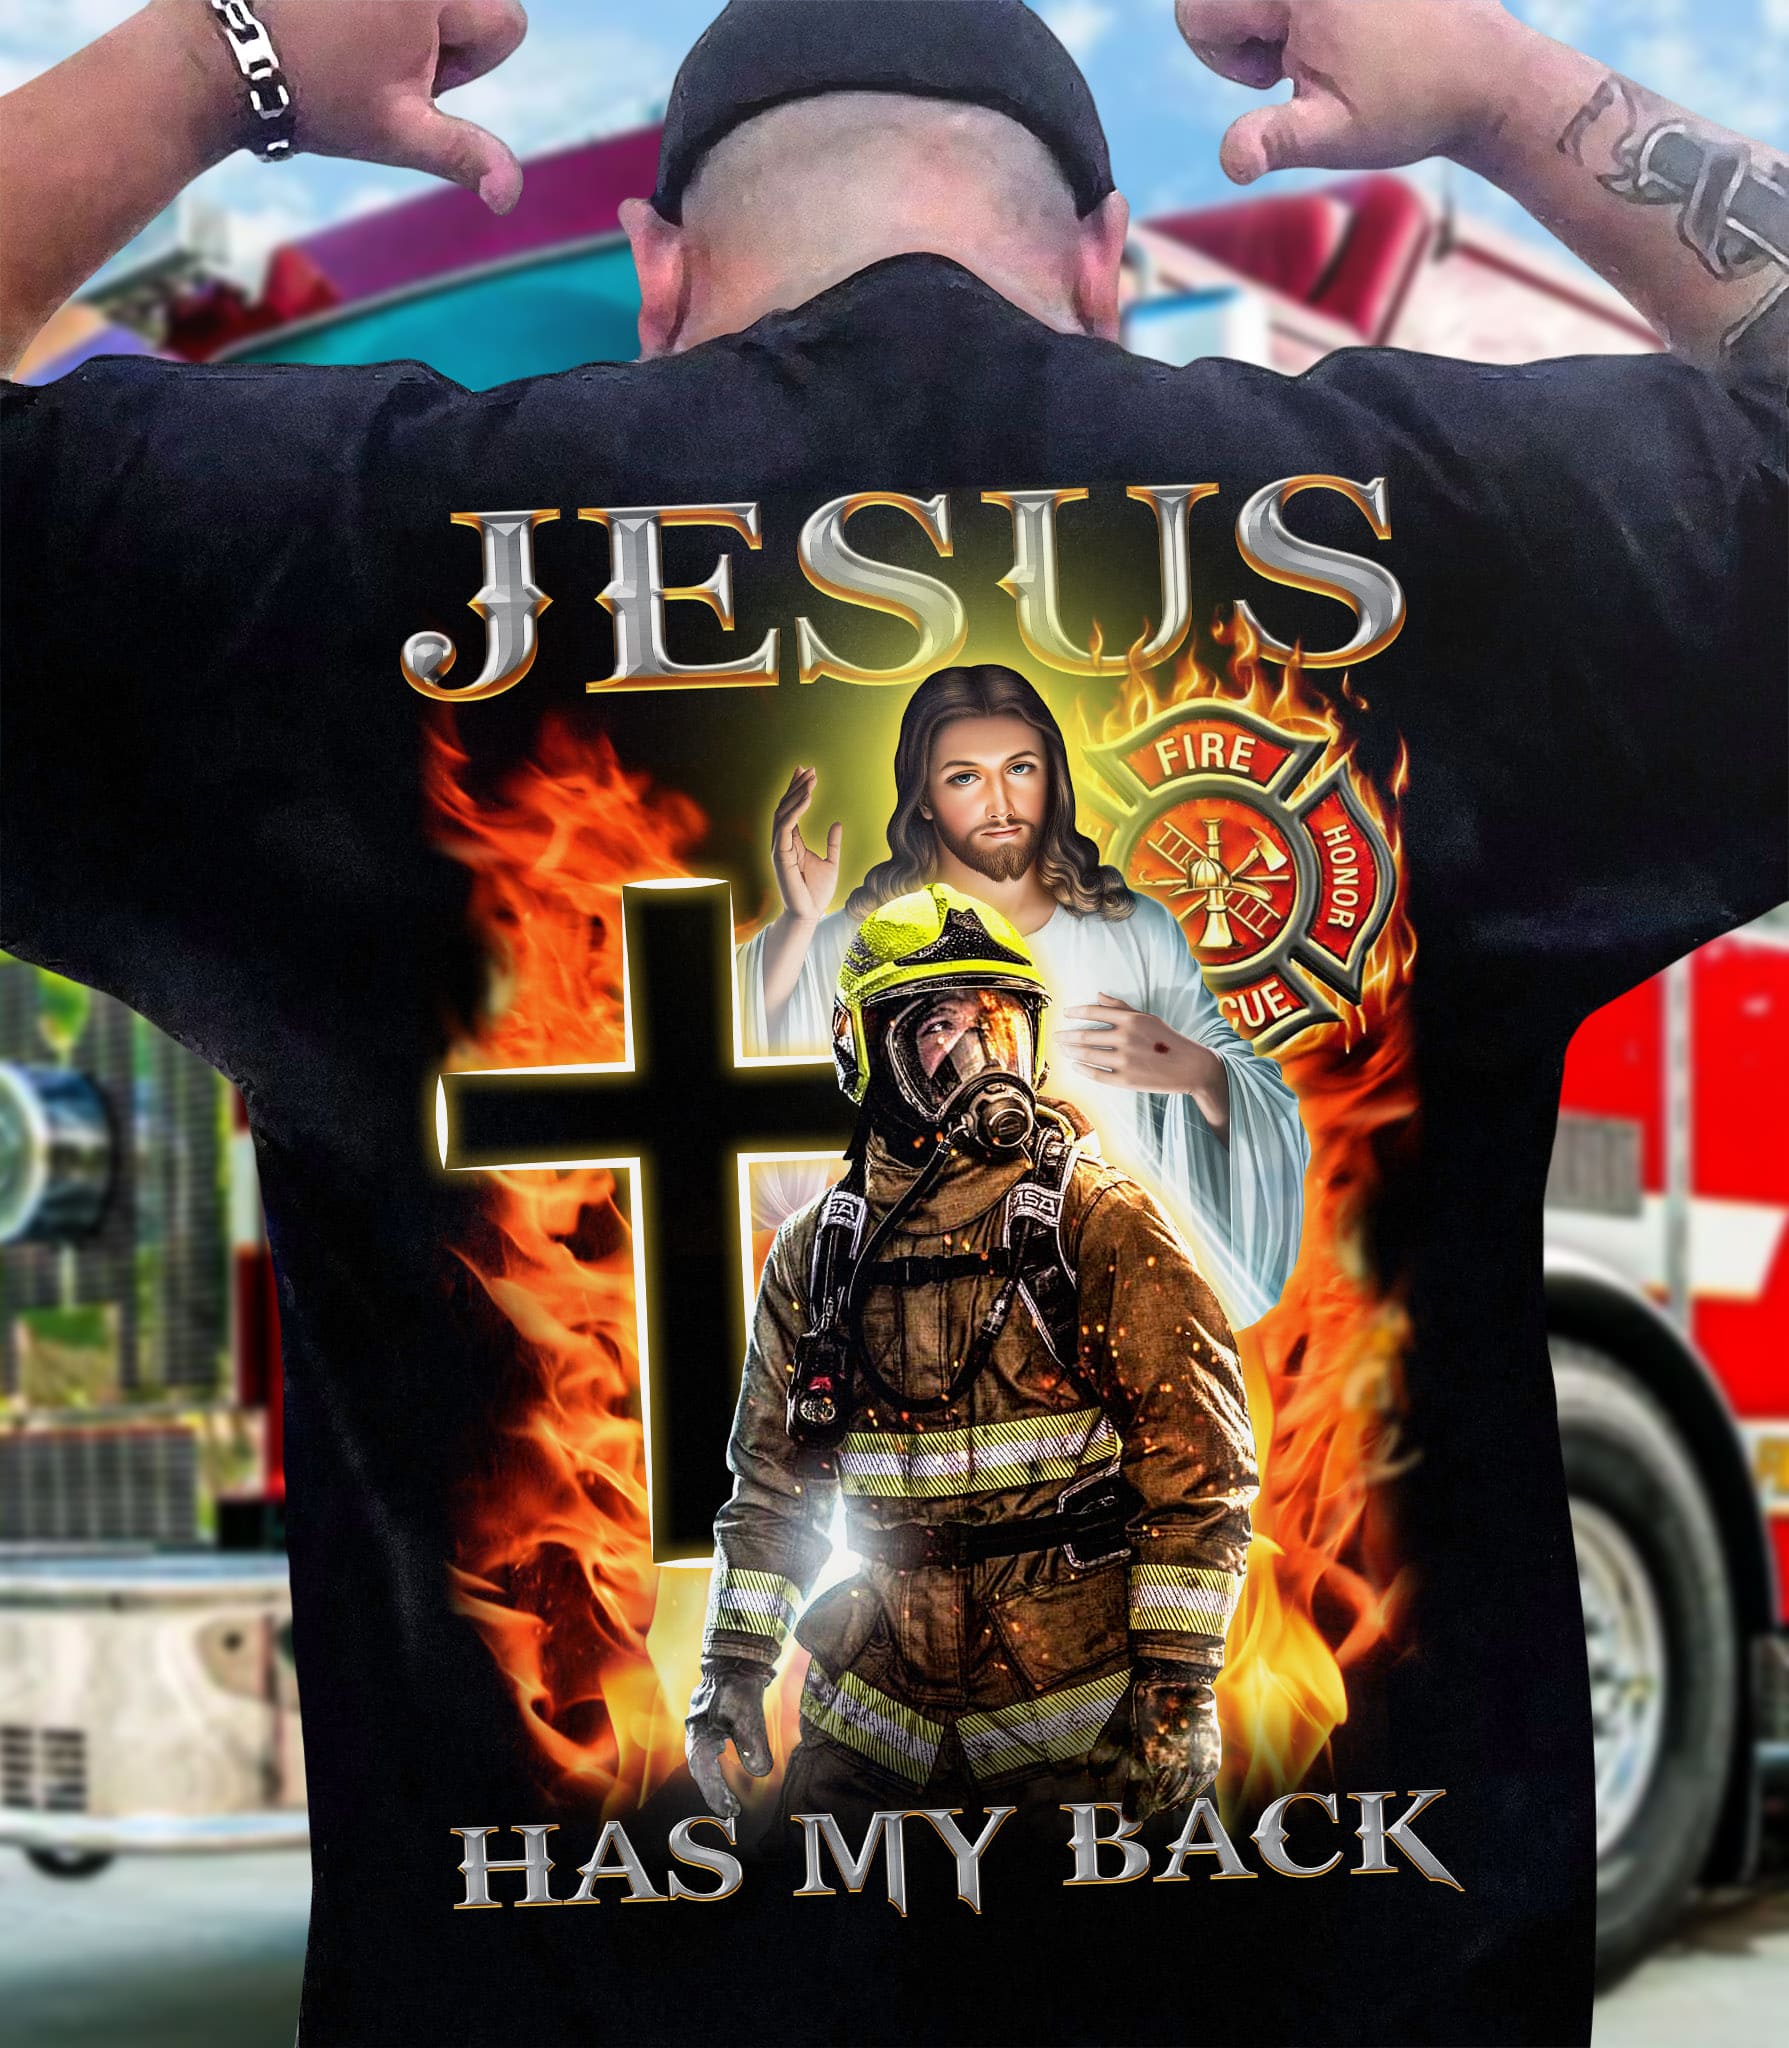 Firefighter Jesus - Jesus has my back